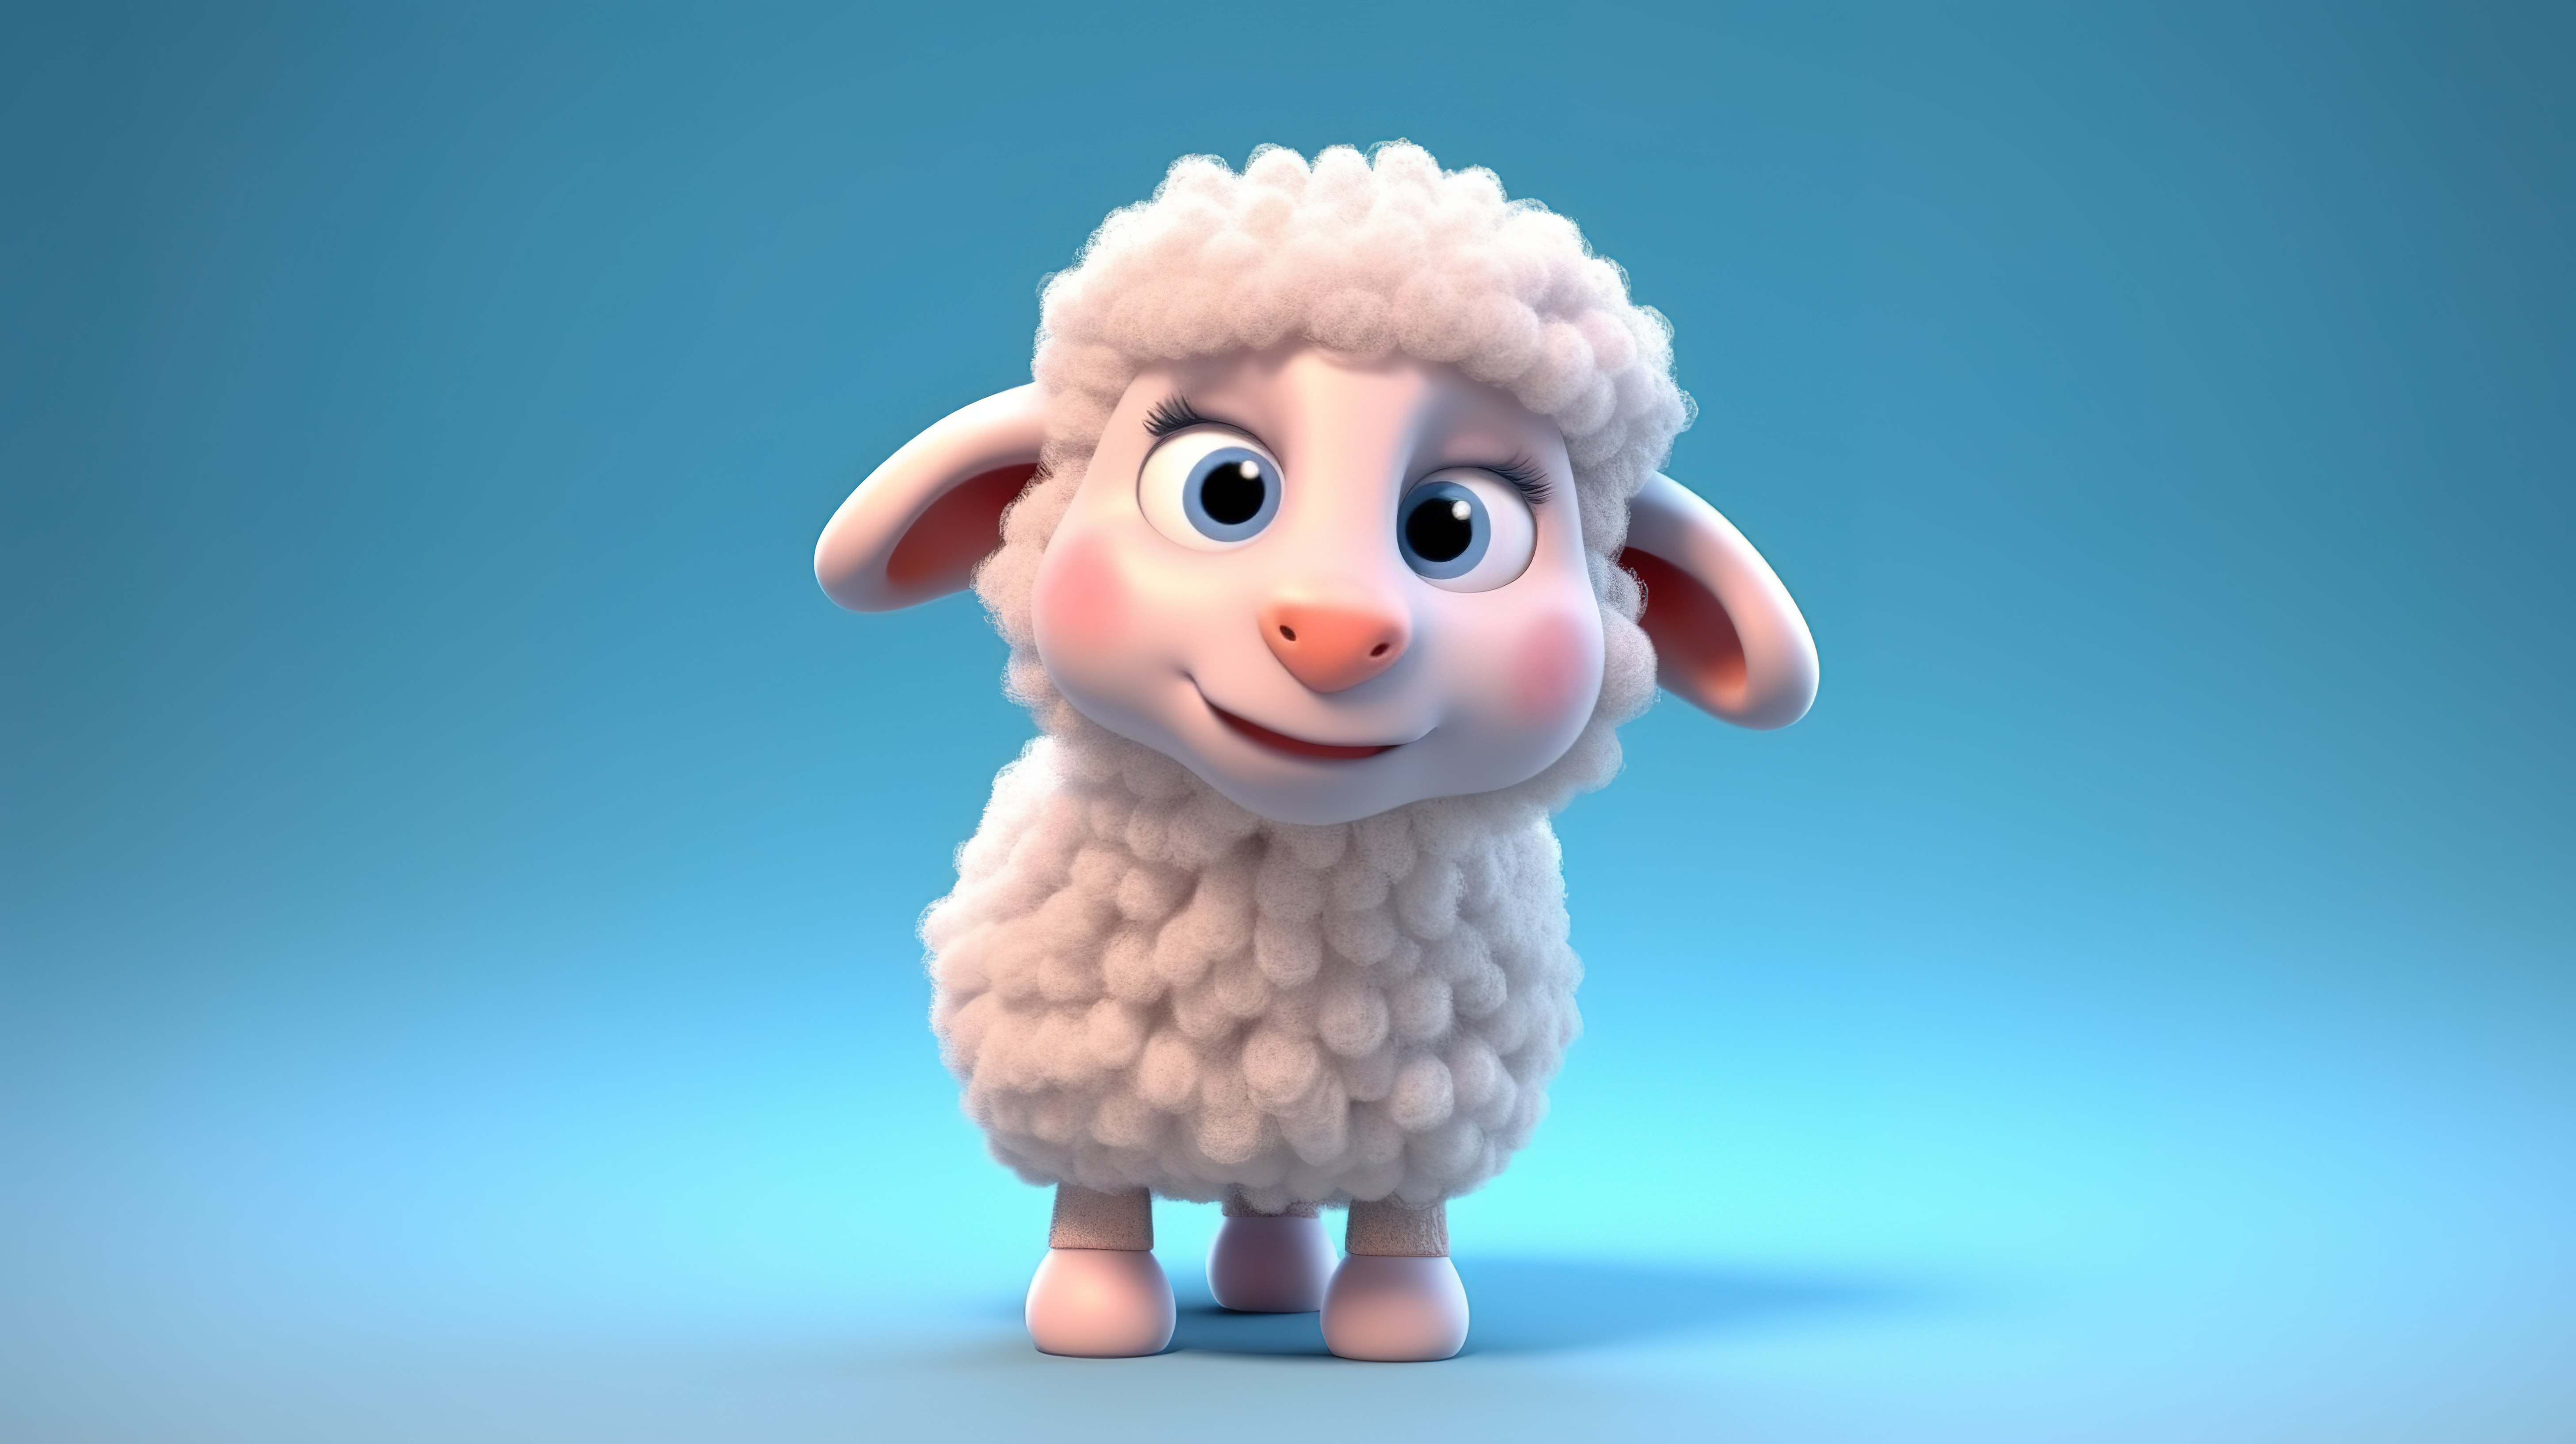 3D 卡通插图中描绘的可爱羔羊图片